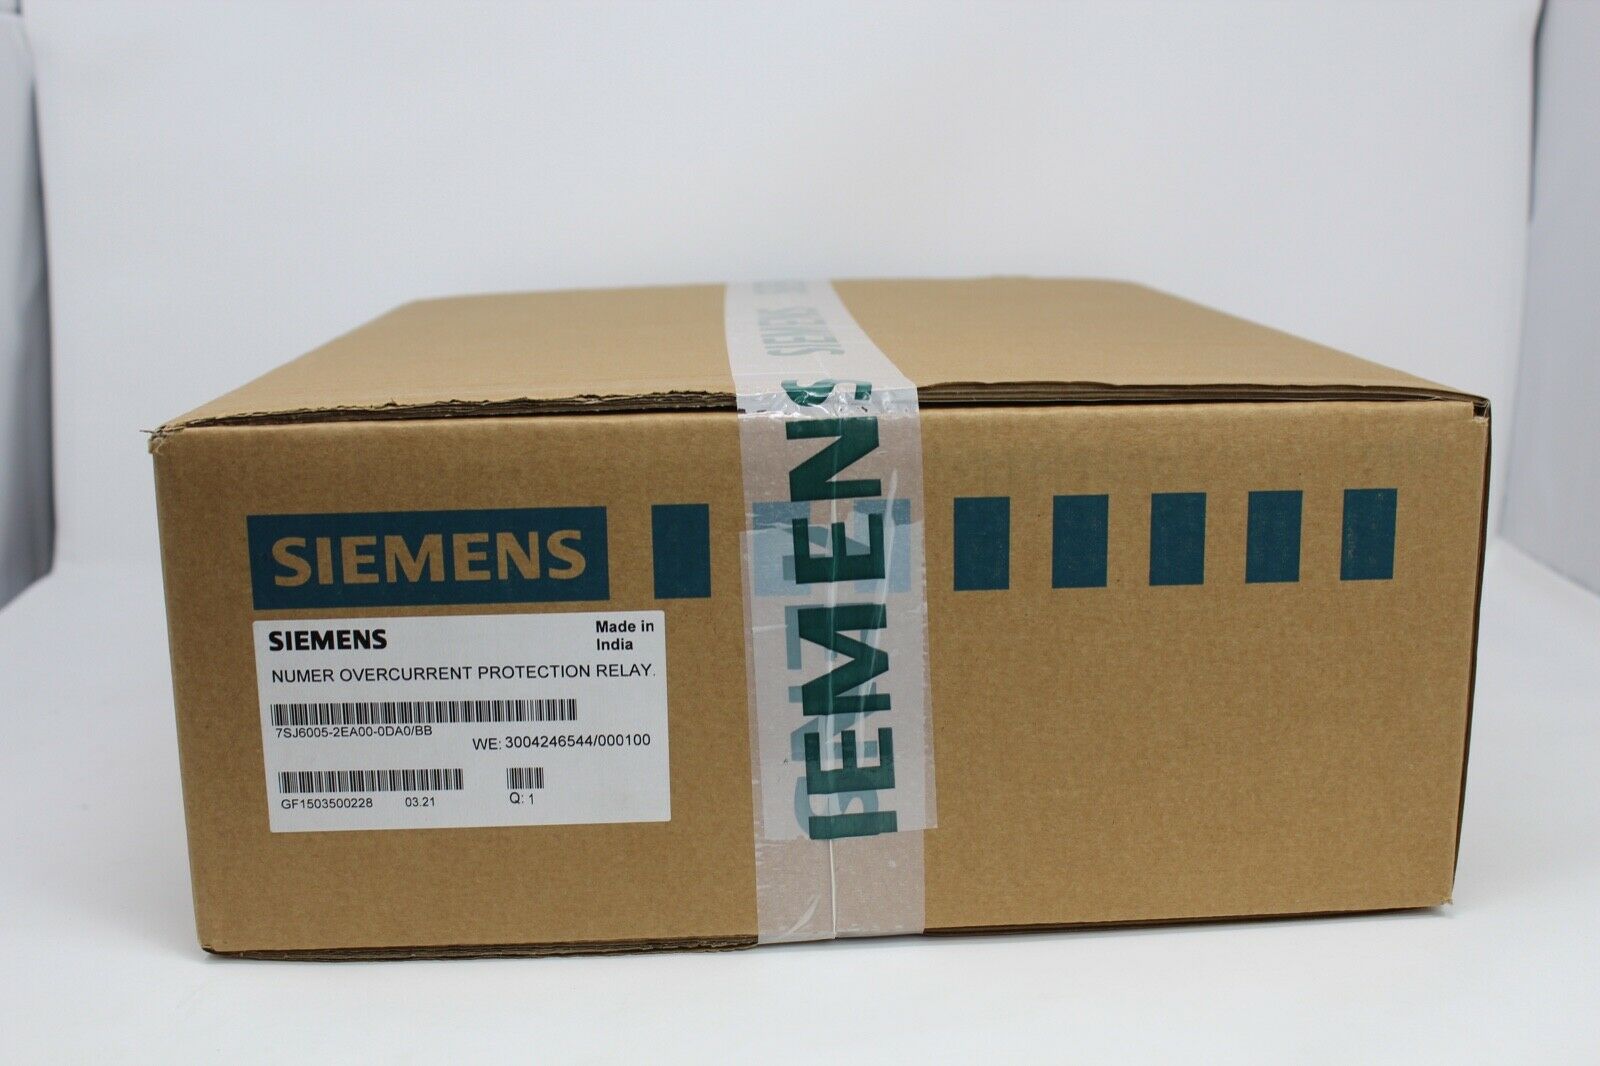 Siemens Siprotec 7SJ6005-2EA00-0DA0/BB Numerical Overcurrent Protection Relay